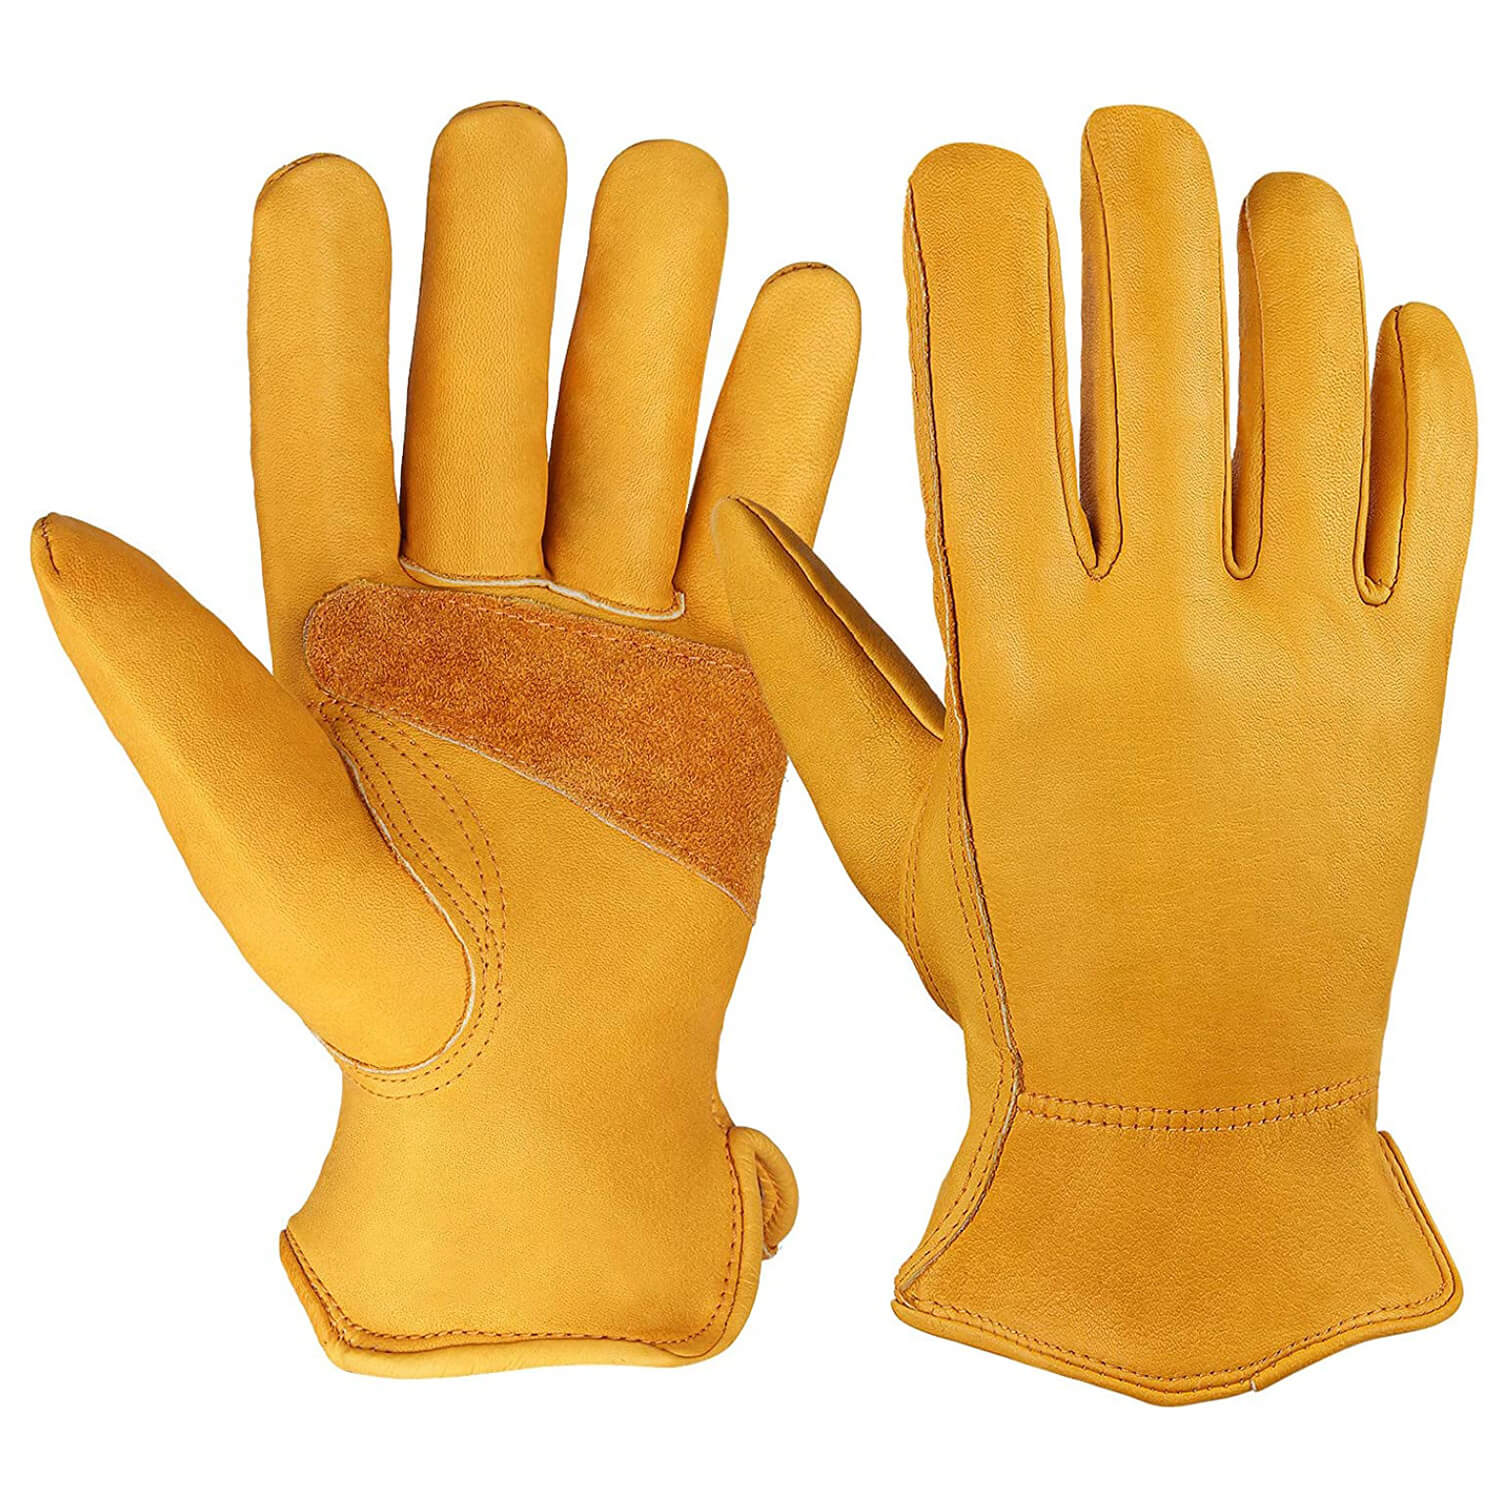 OZERO Flex Grip Leather Work Gloves Stretchable Wrist Tough Cowhide Working Glove 1 Pair (Gold Medium)